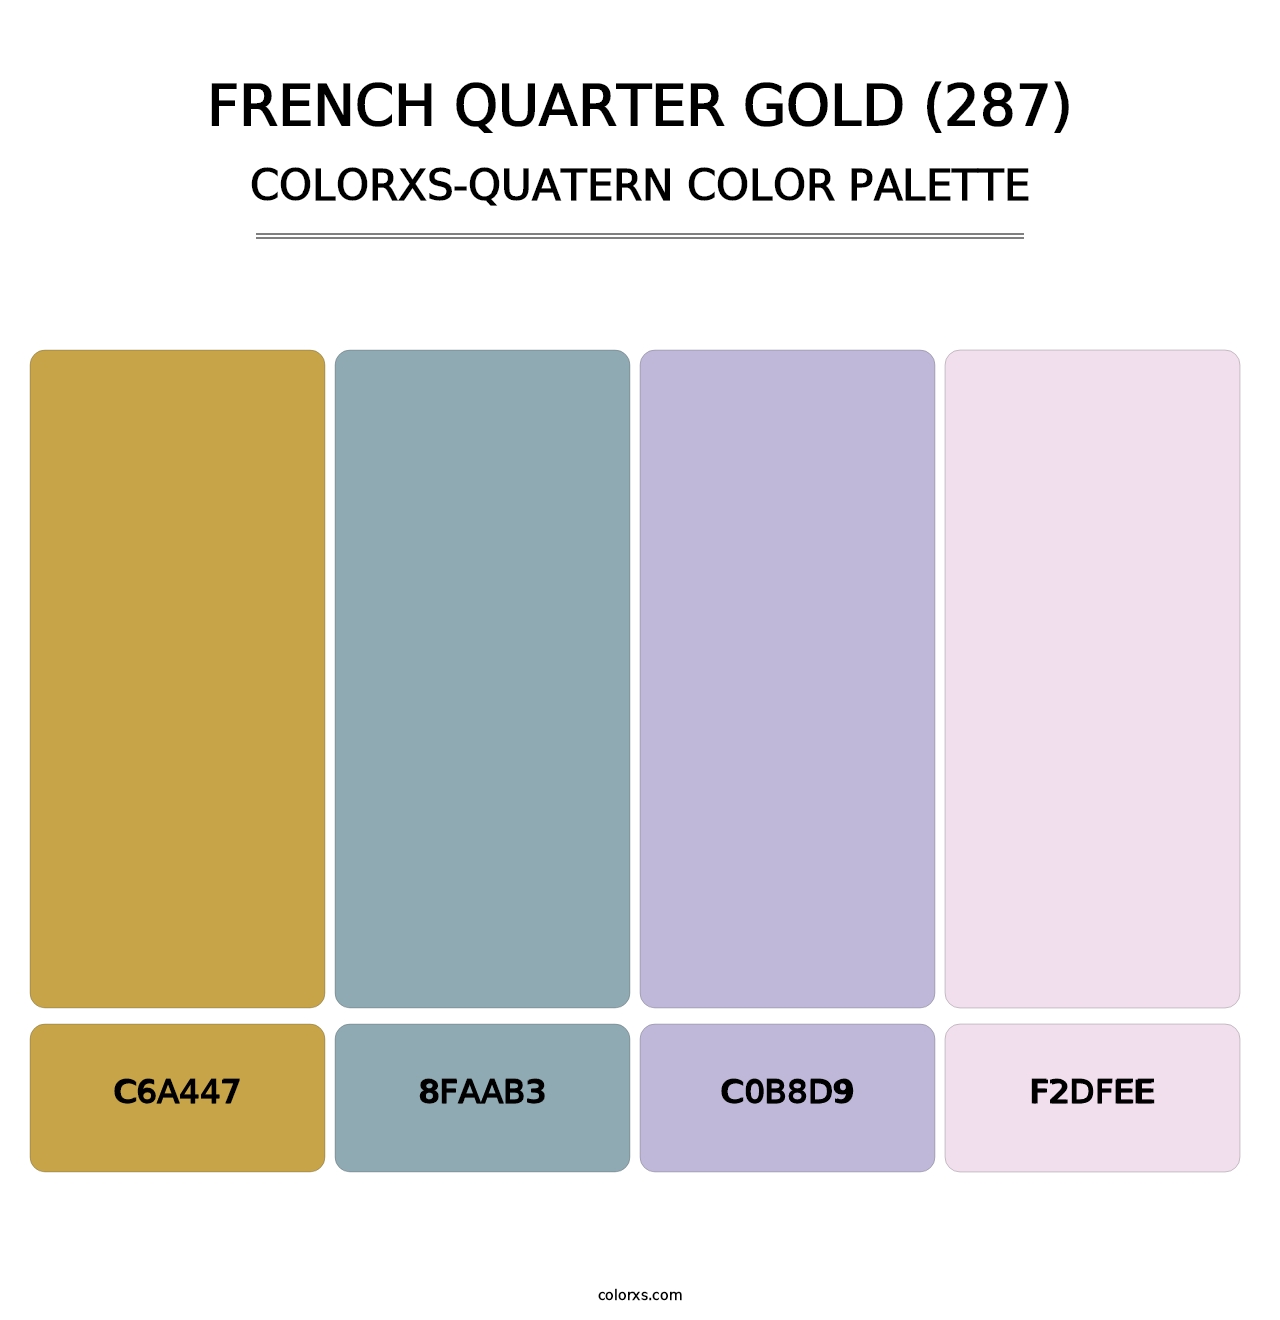 French Quarter Gold (287) - Colorxs Quatern Palette